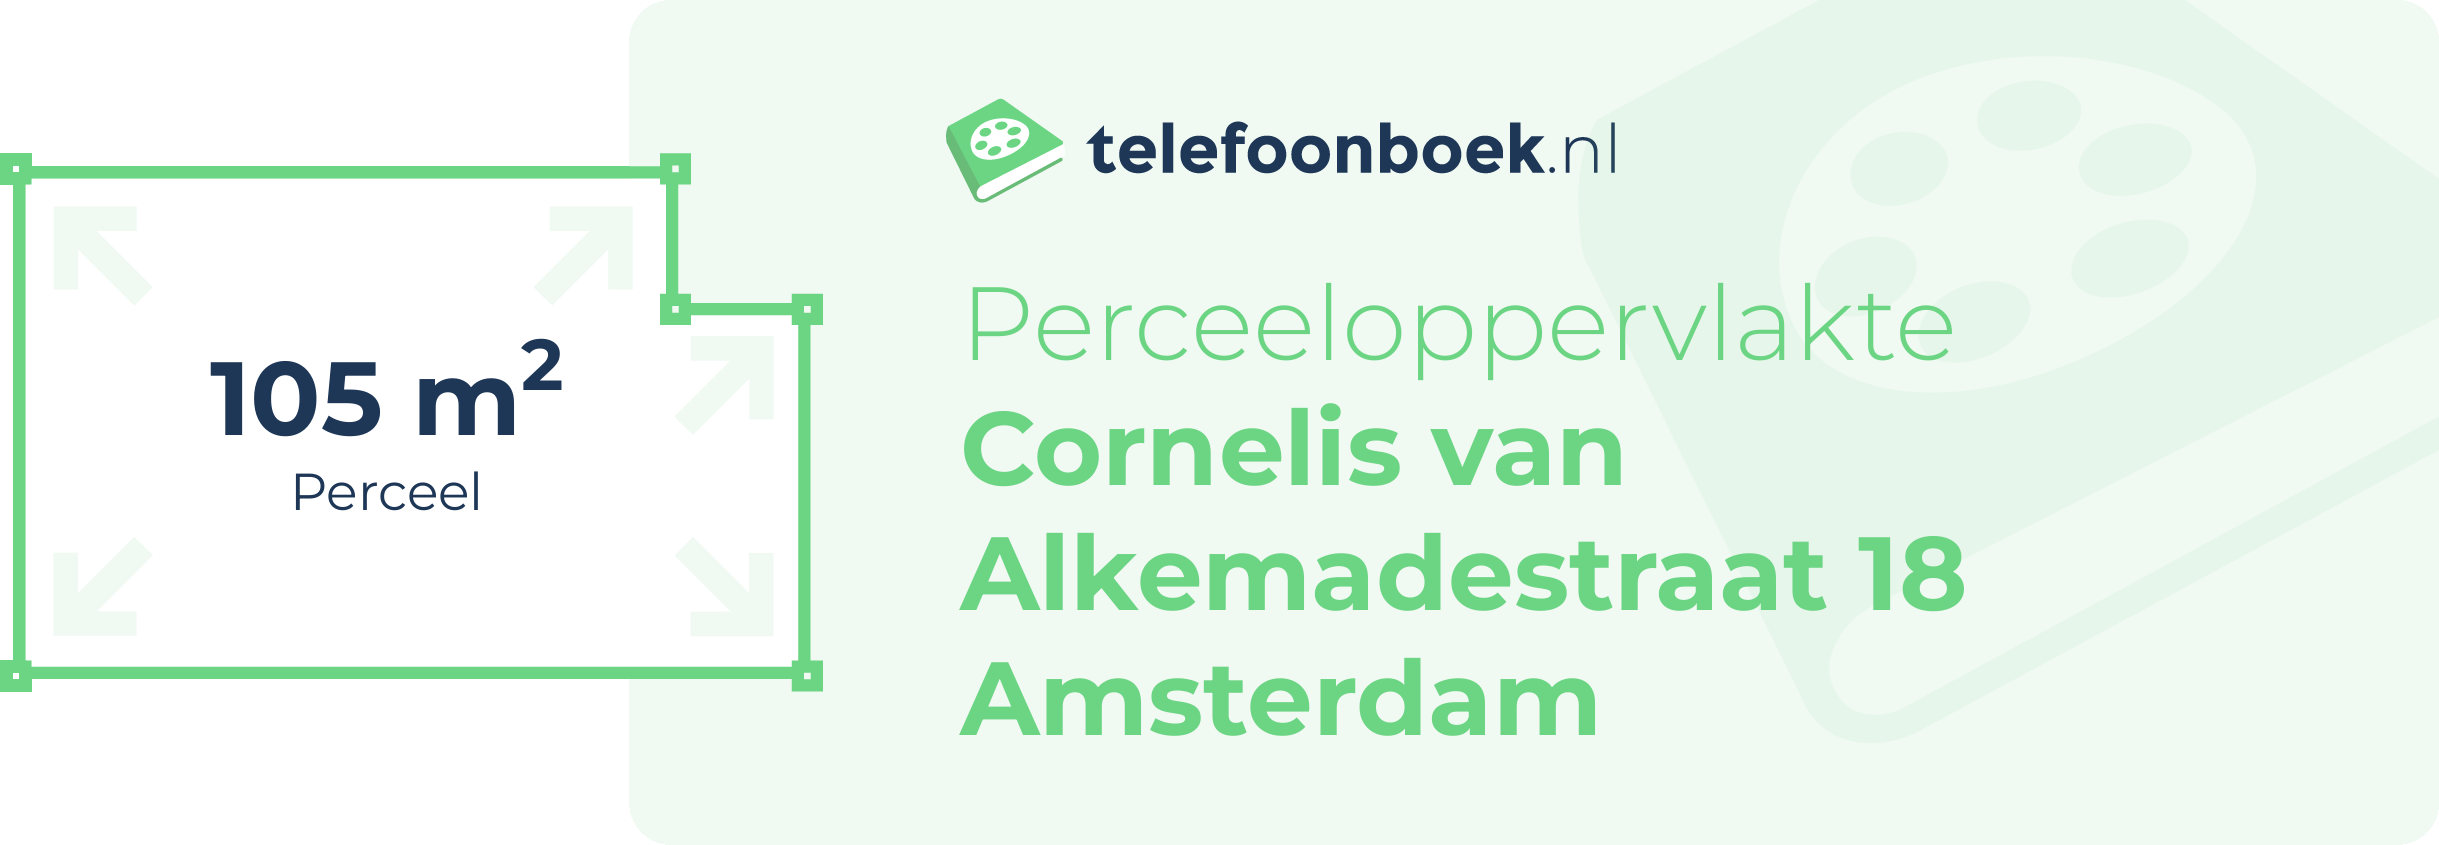 Perceeloppervlakte Cornelis Van Alkemadestraat 18 Amsterdam